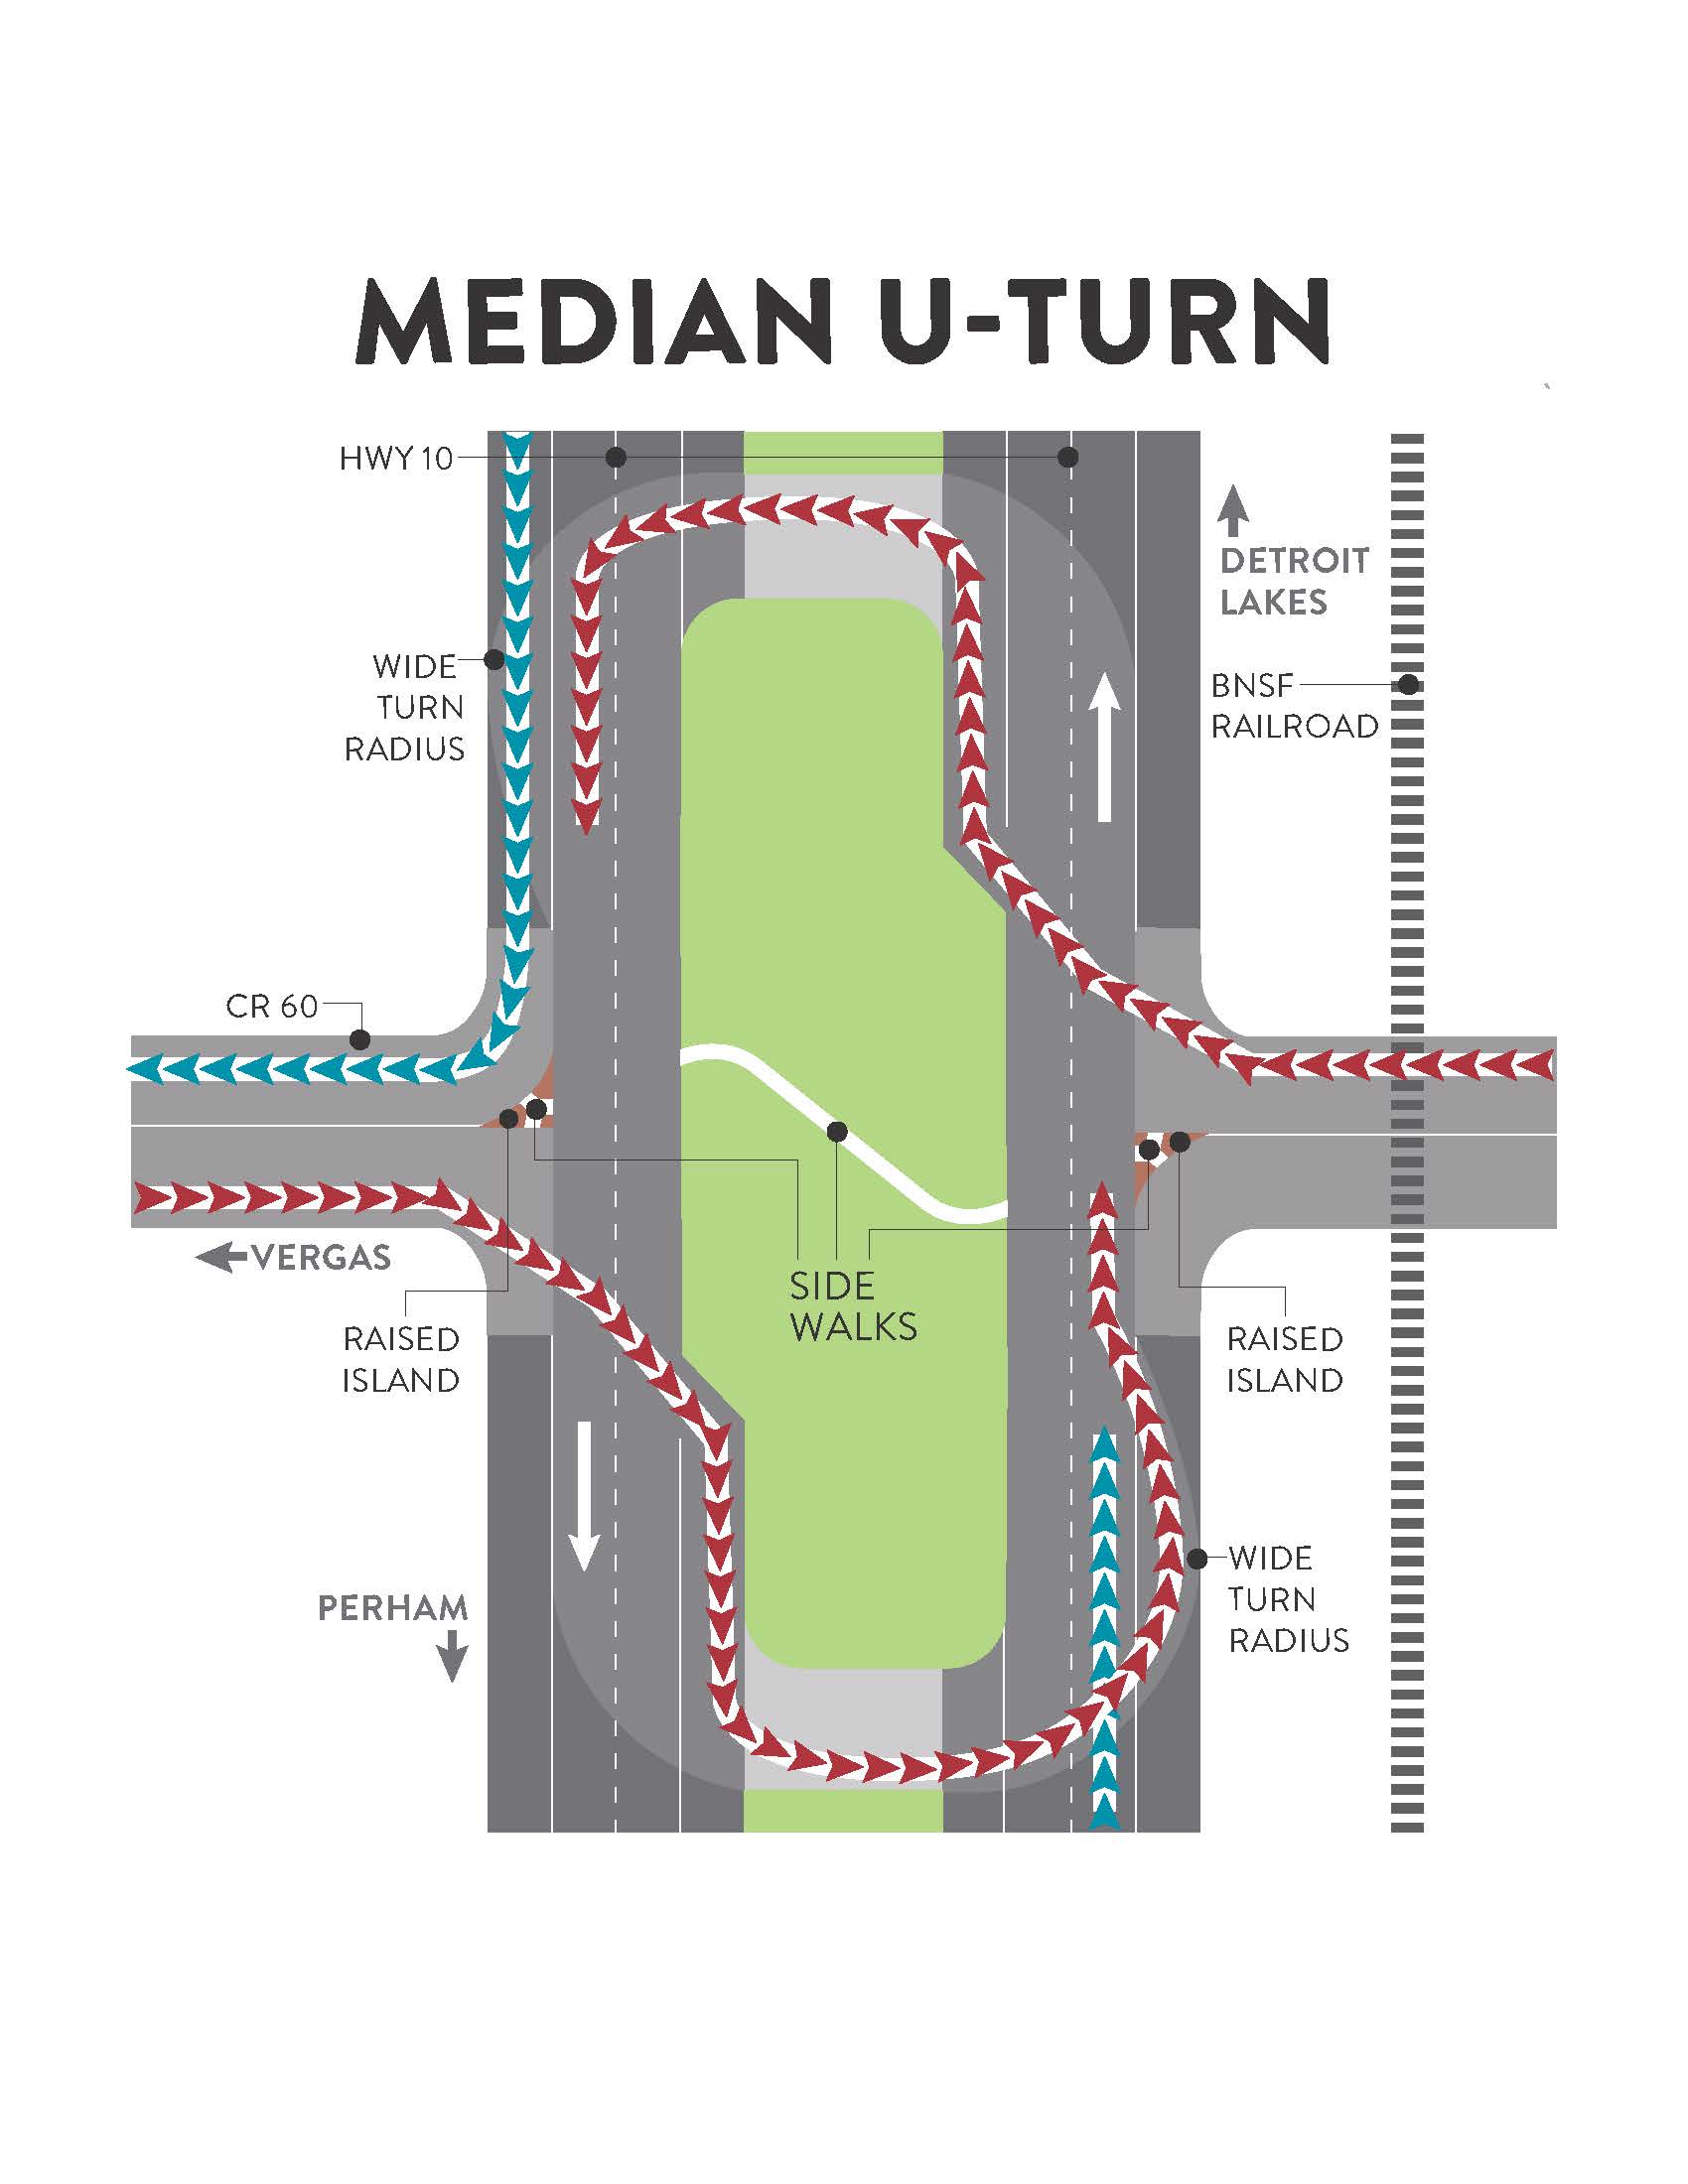 Top view of option one median u-turn.